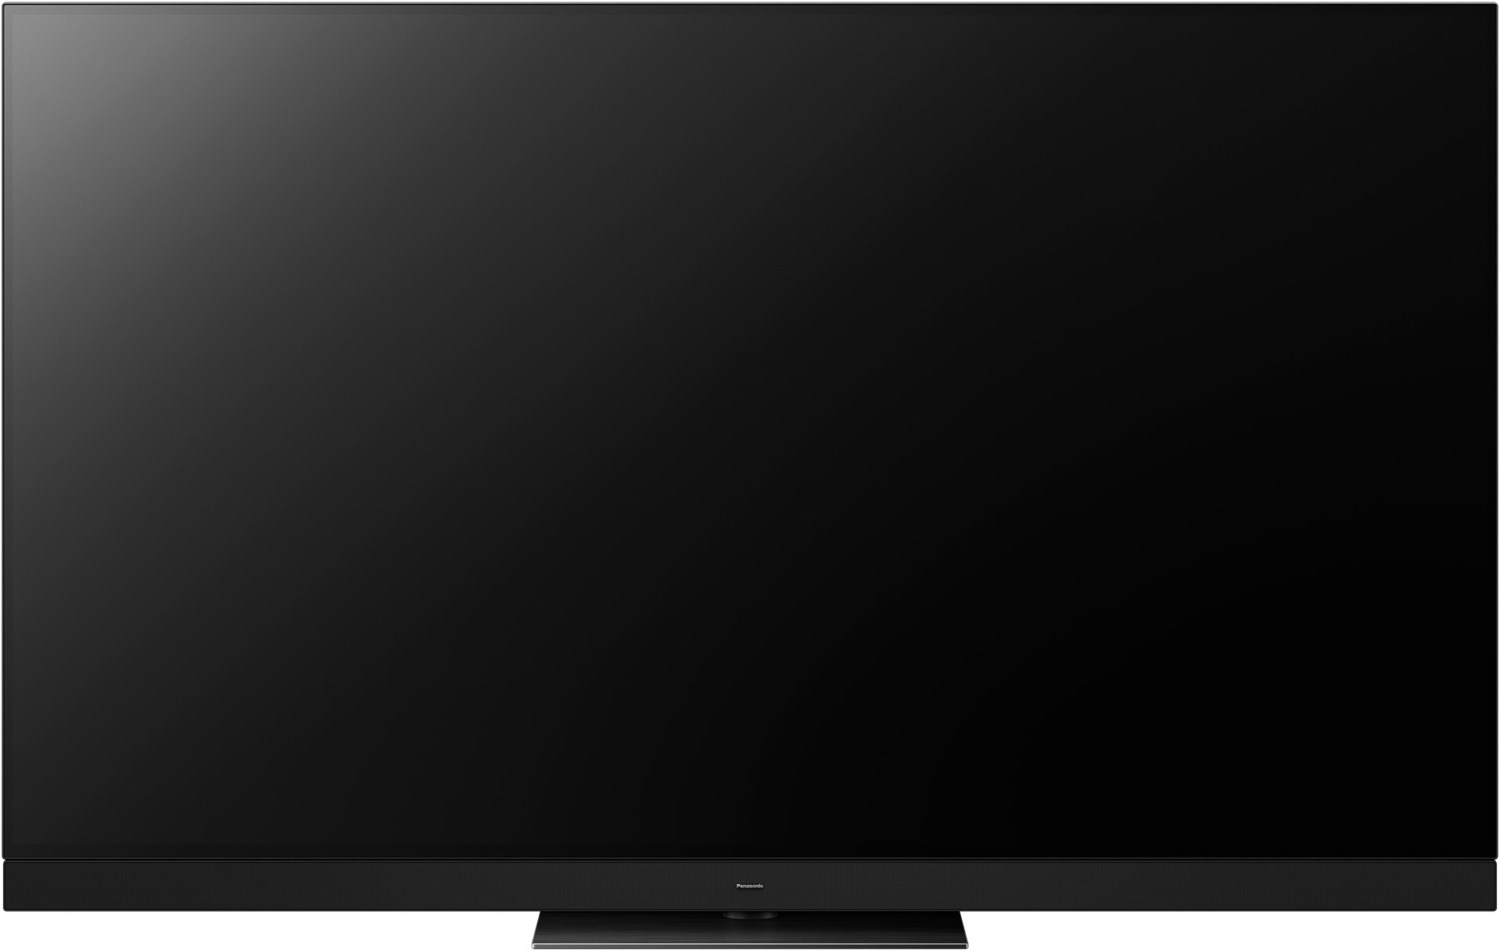 Panasonic Master OLED 77 Zoll (194 cm) UHD TV black metallic